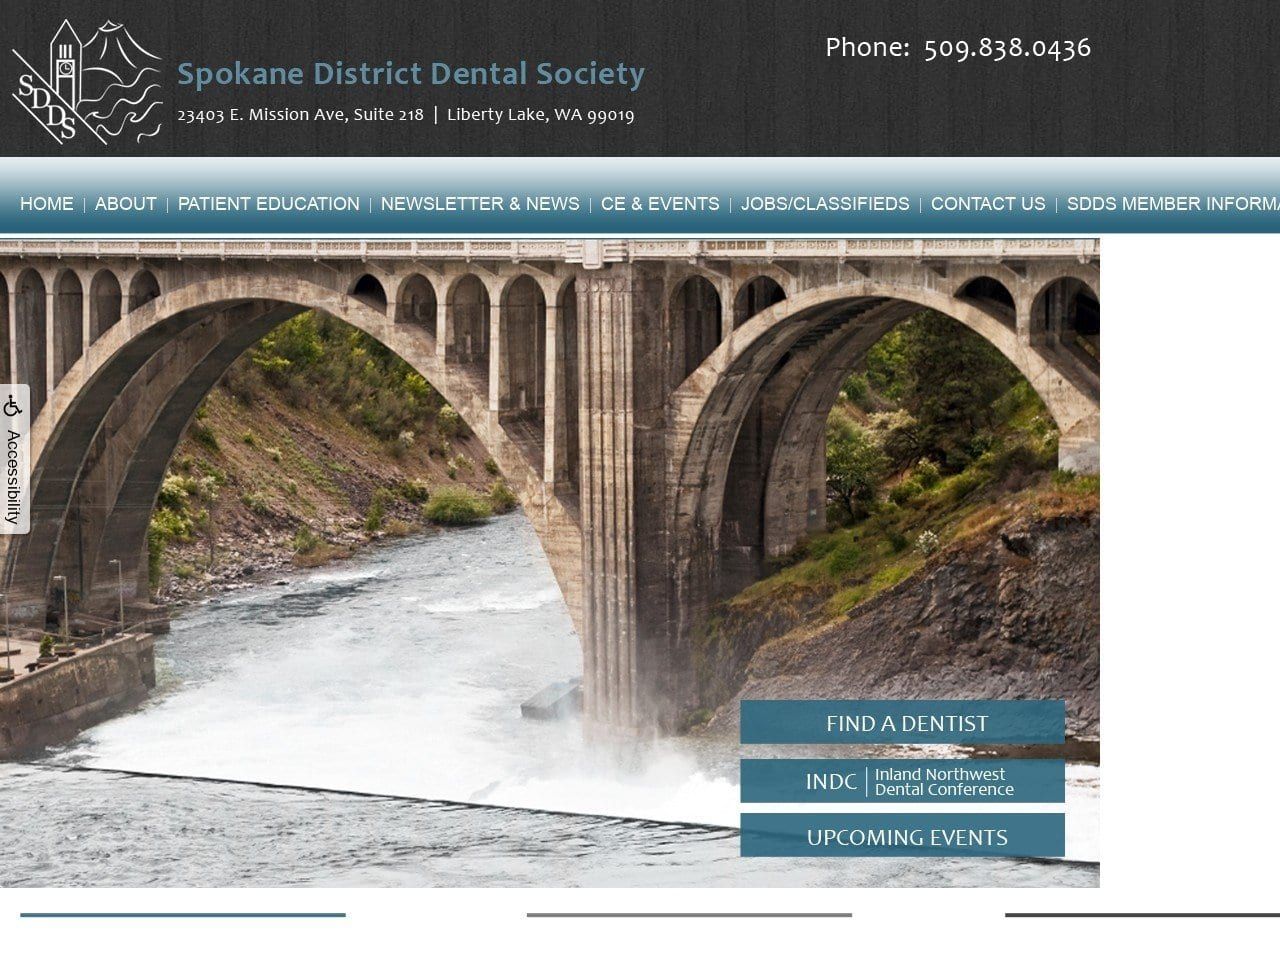 Spokane District Dental Society Website Screenshot from spokanedentalsociety.org